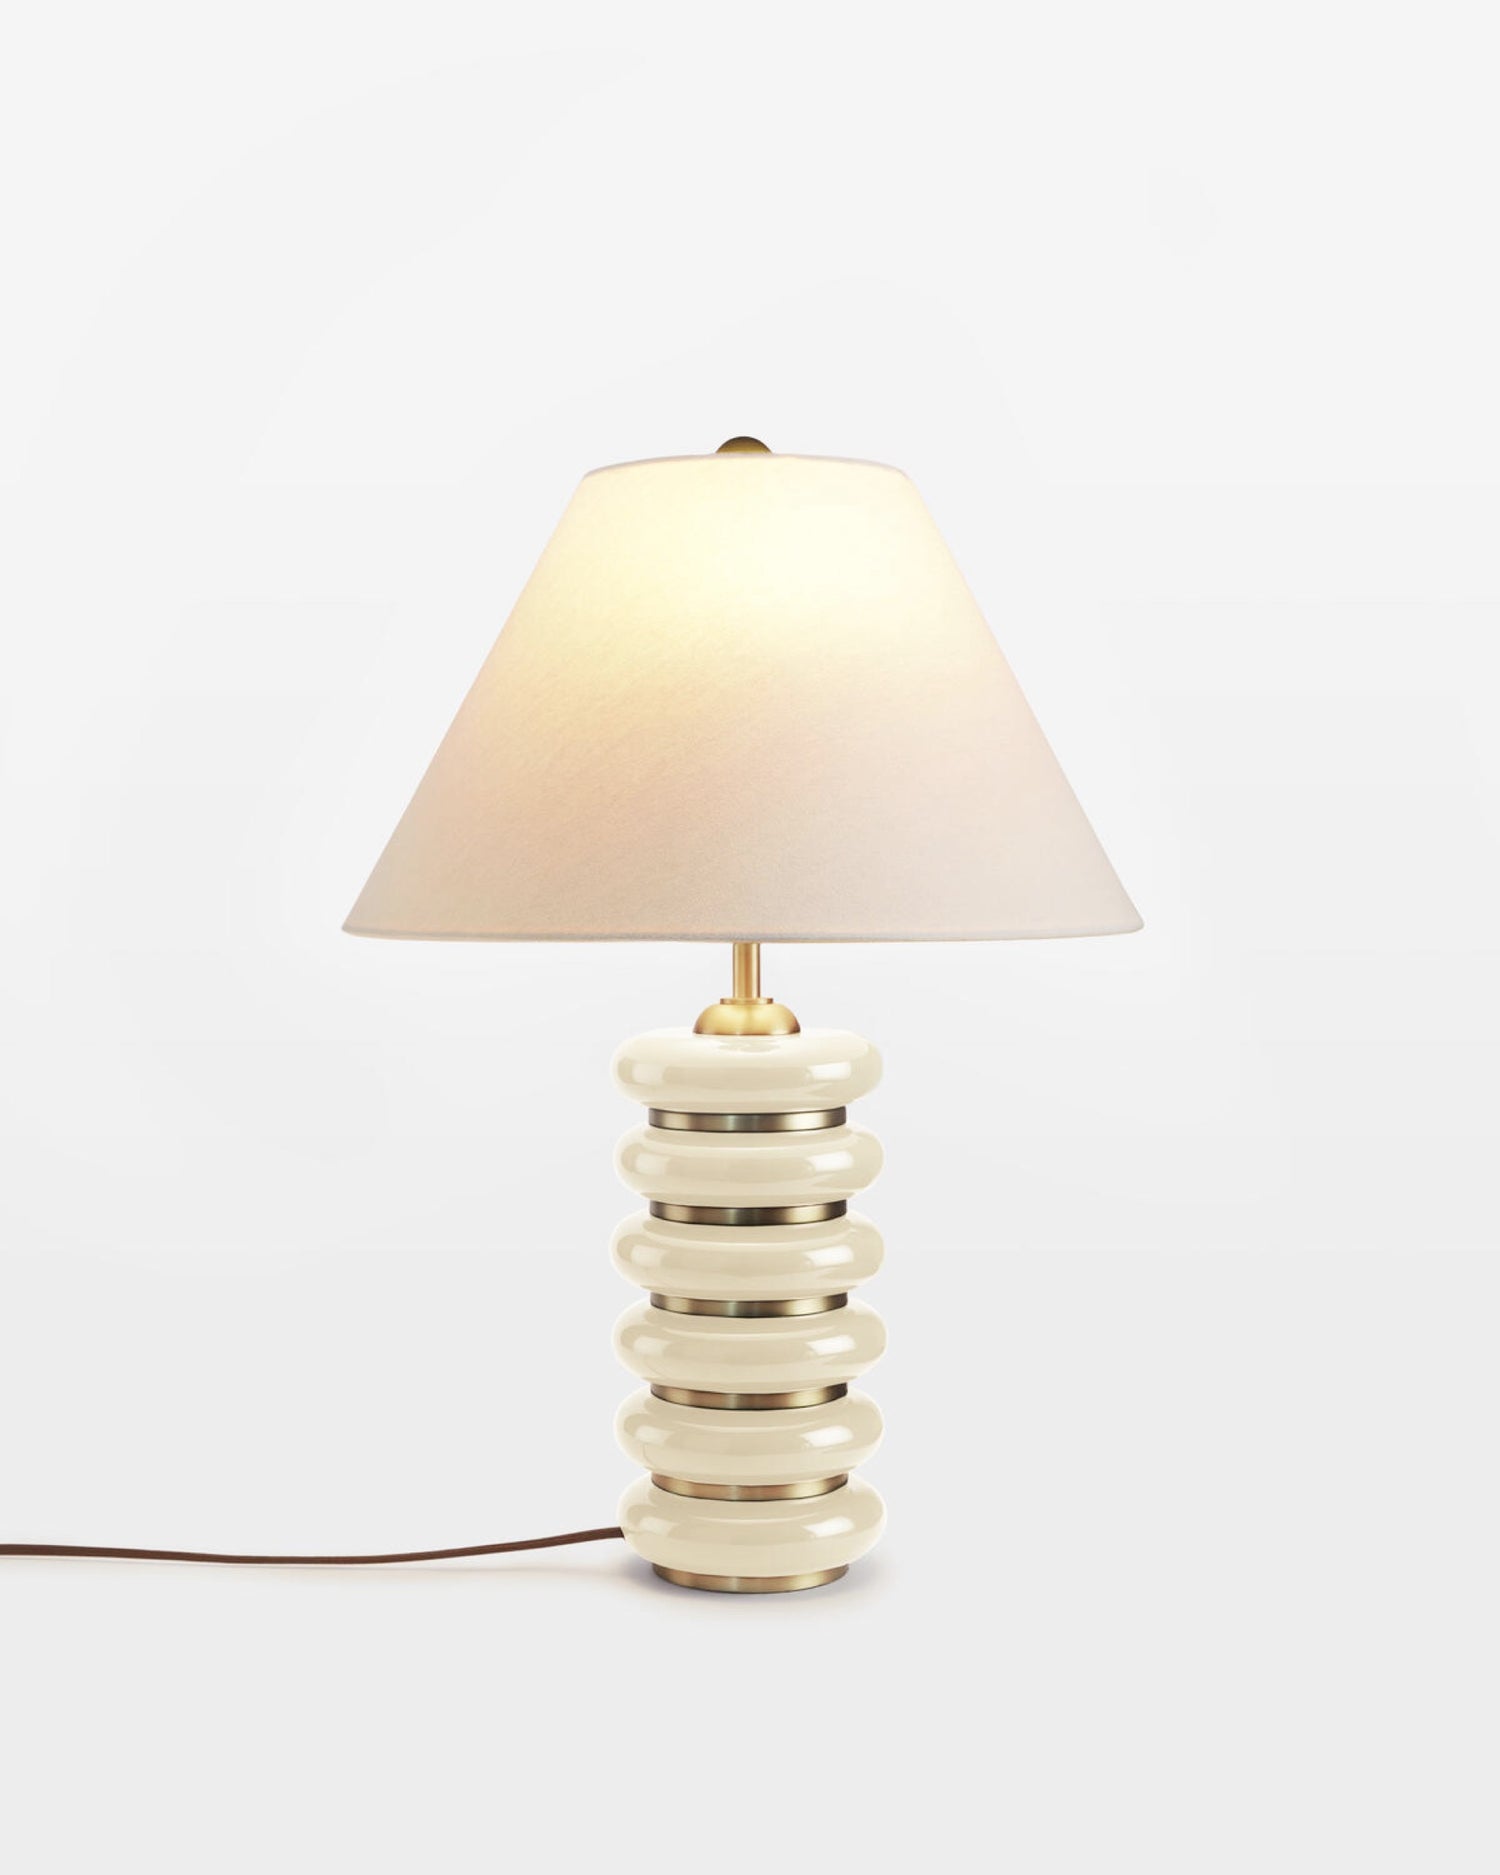 Greyson Table Lamp